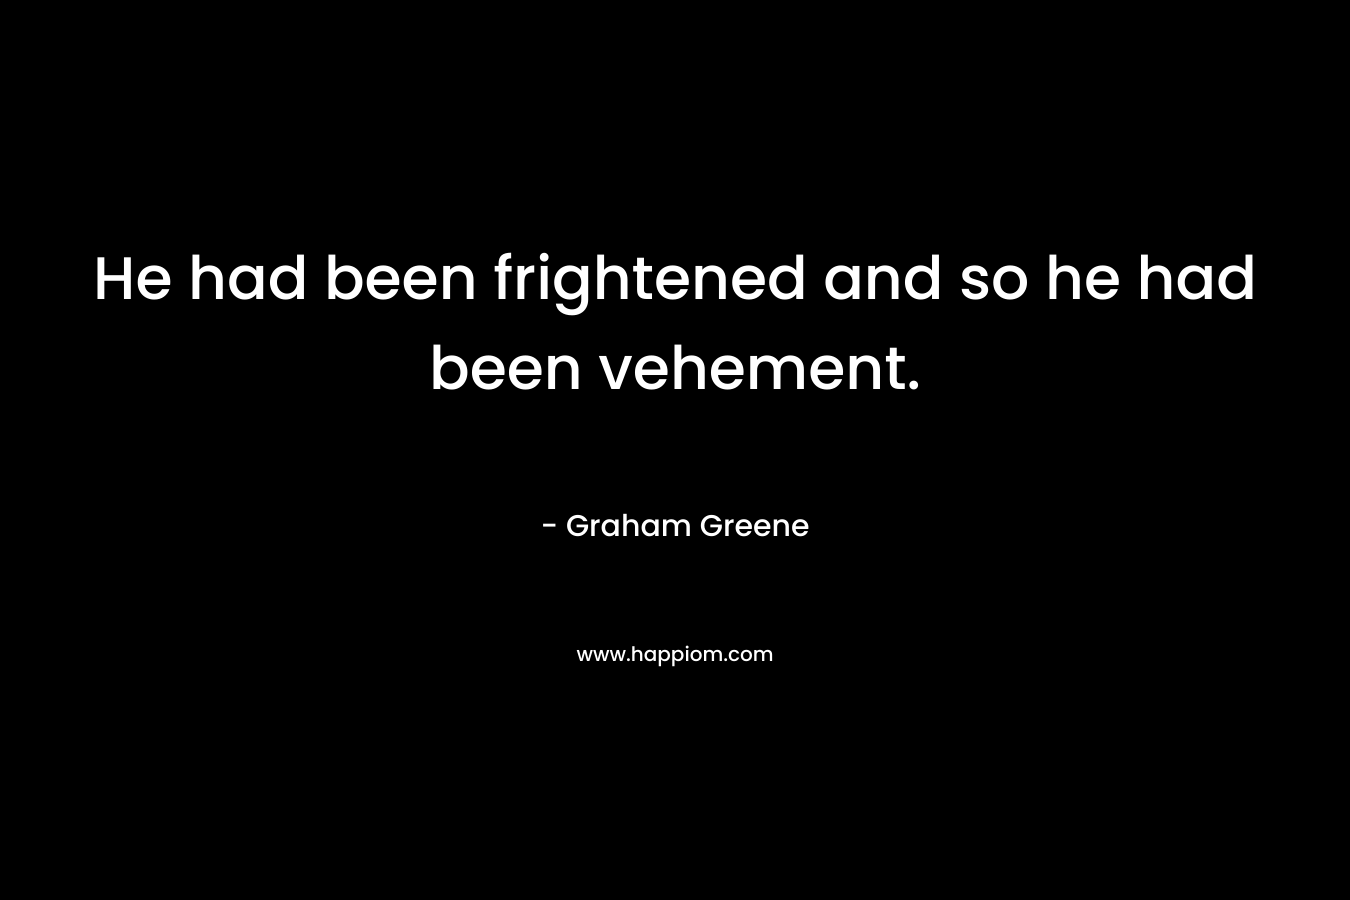 He had been frightened and so he had been vehement.